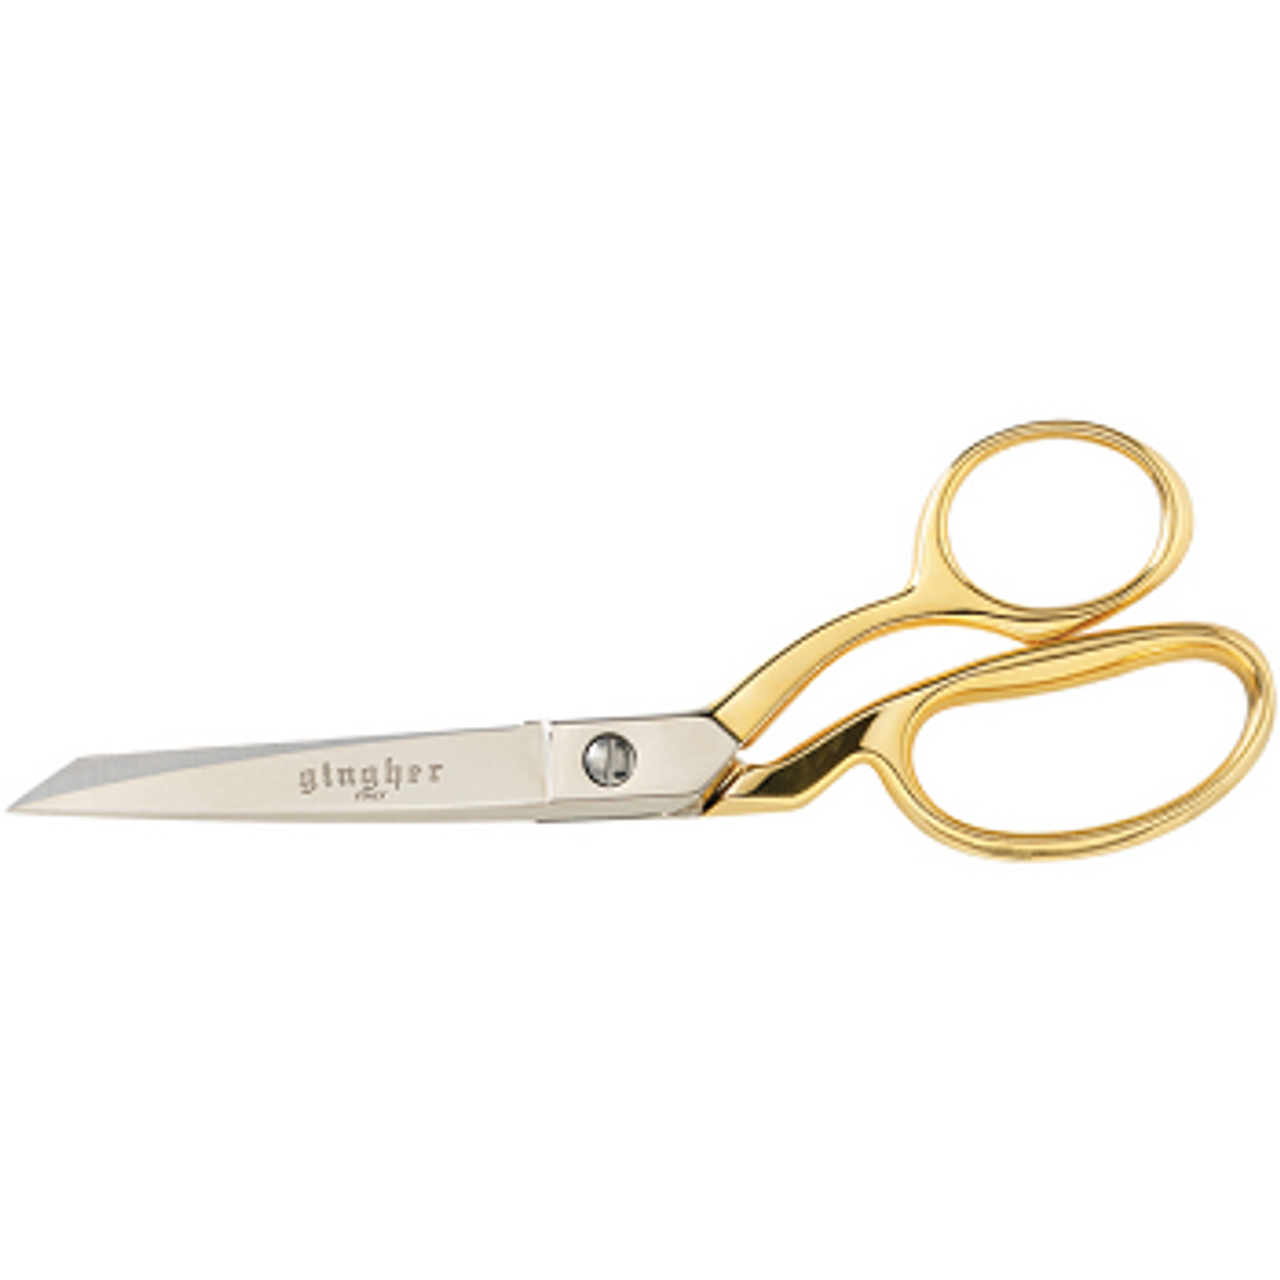 8 Knife Edge Bent Scissors - mrsewing